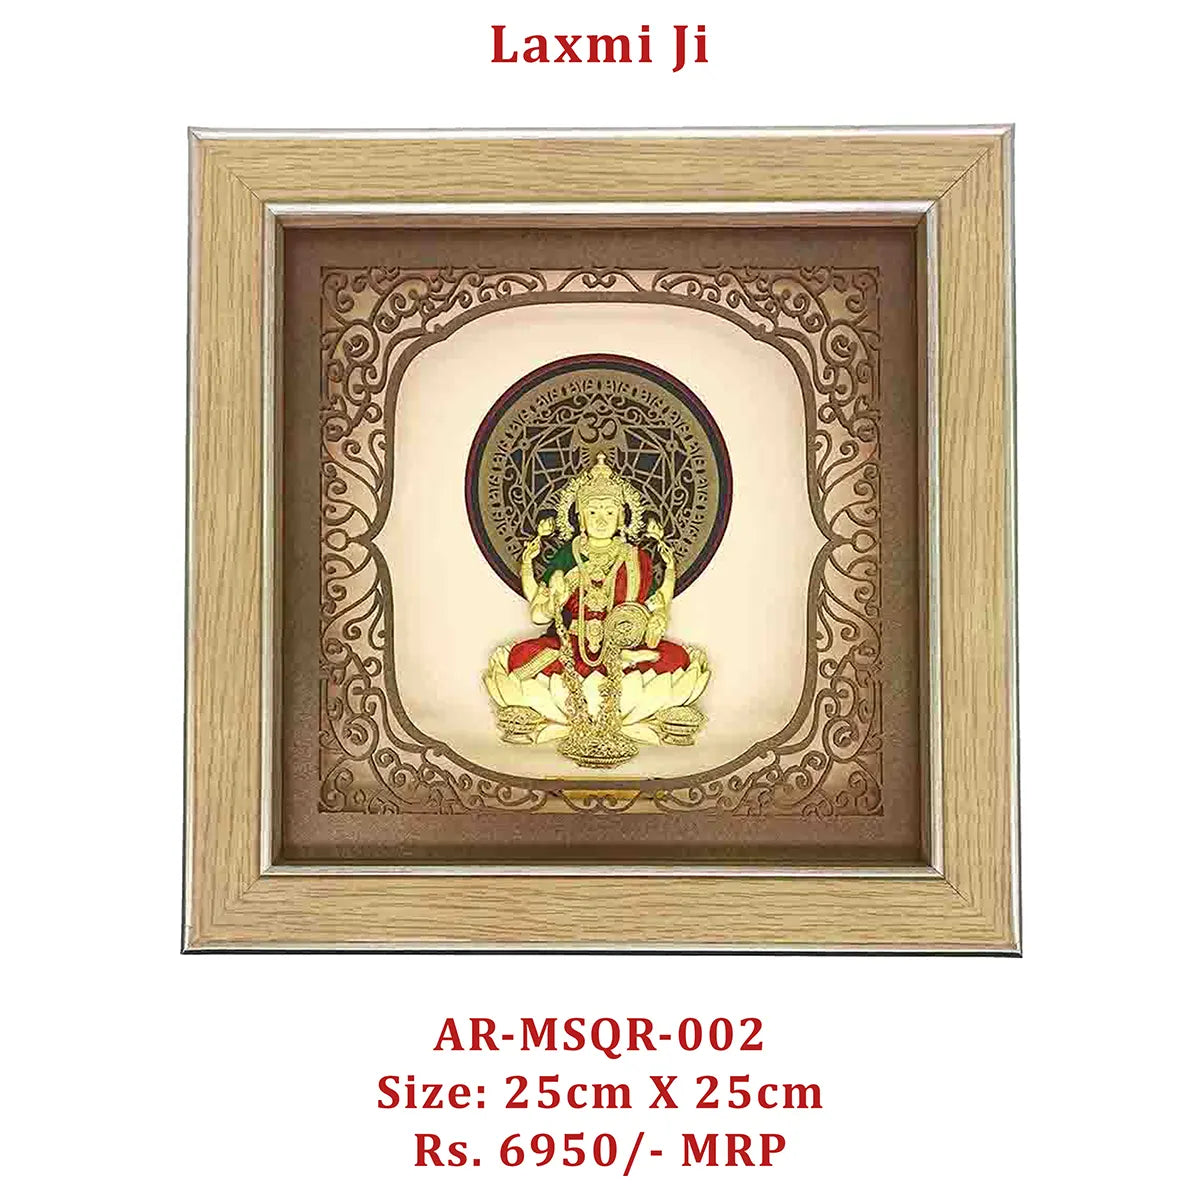 New Laxmi ji Frame 25cm x 25cm size